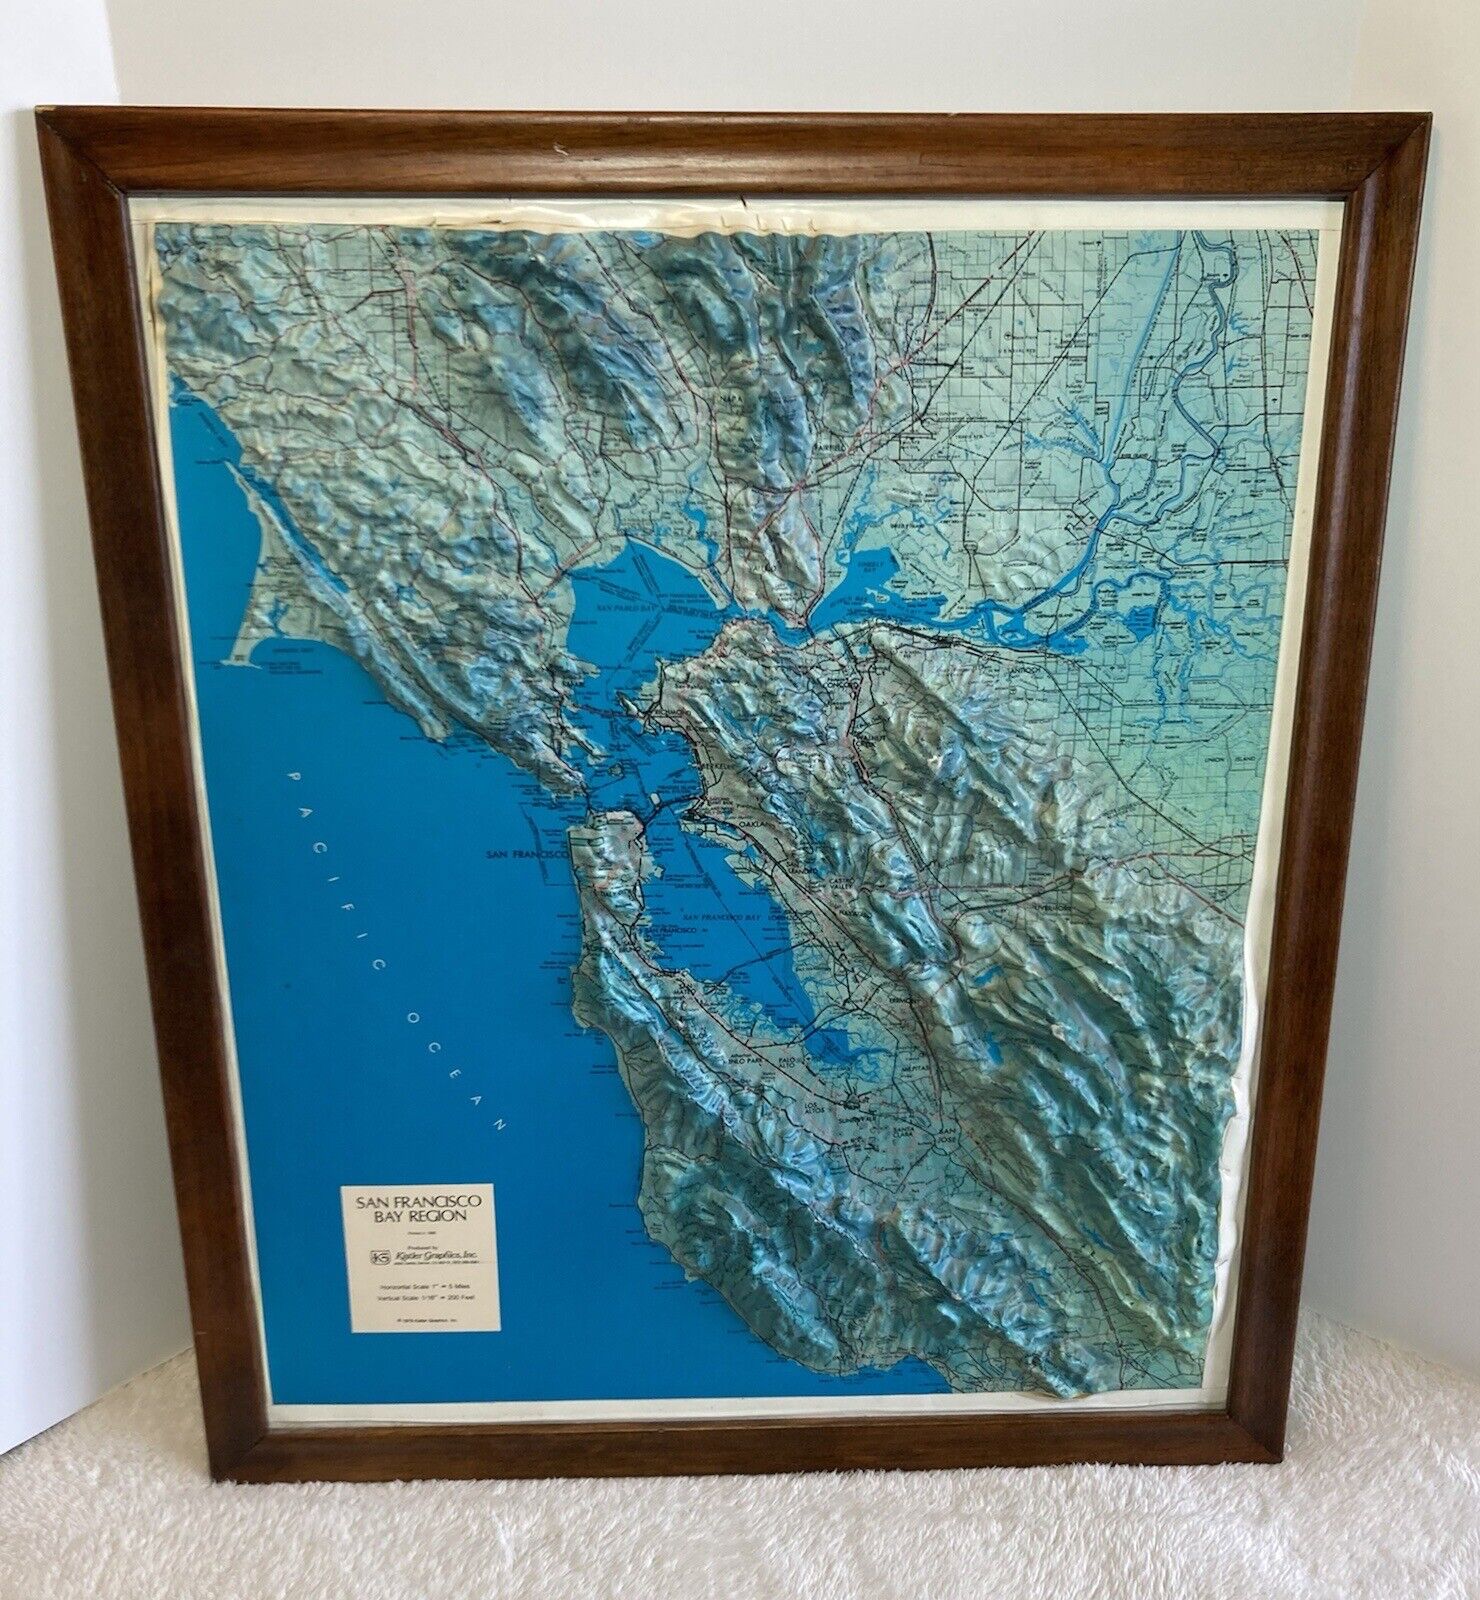 3D topographic map of San Francisco Bay Region framed, Kistler Graphics Inc 1986